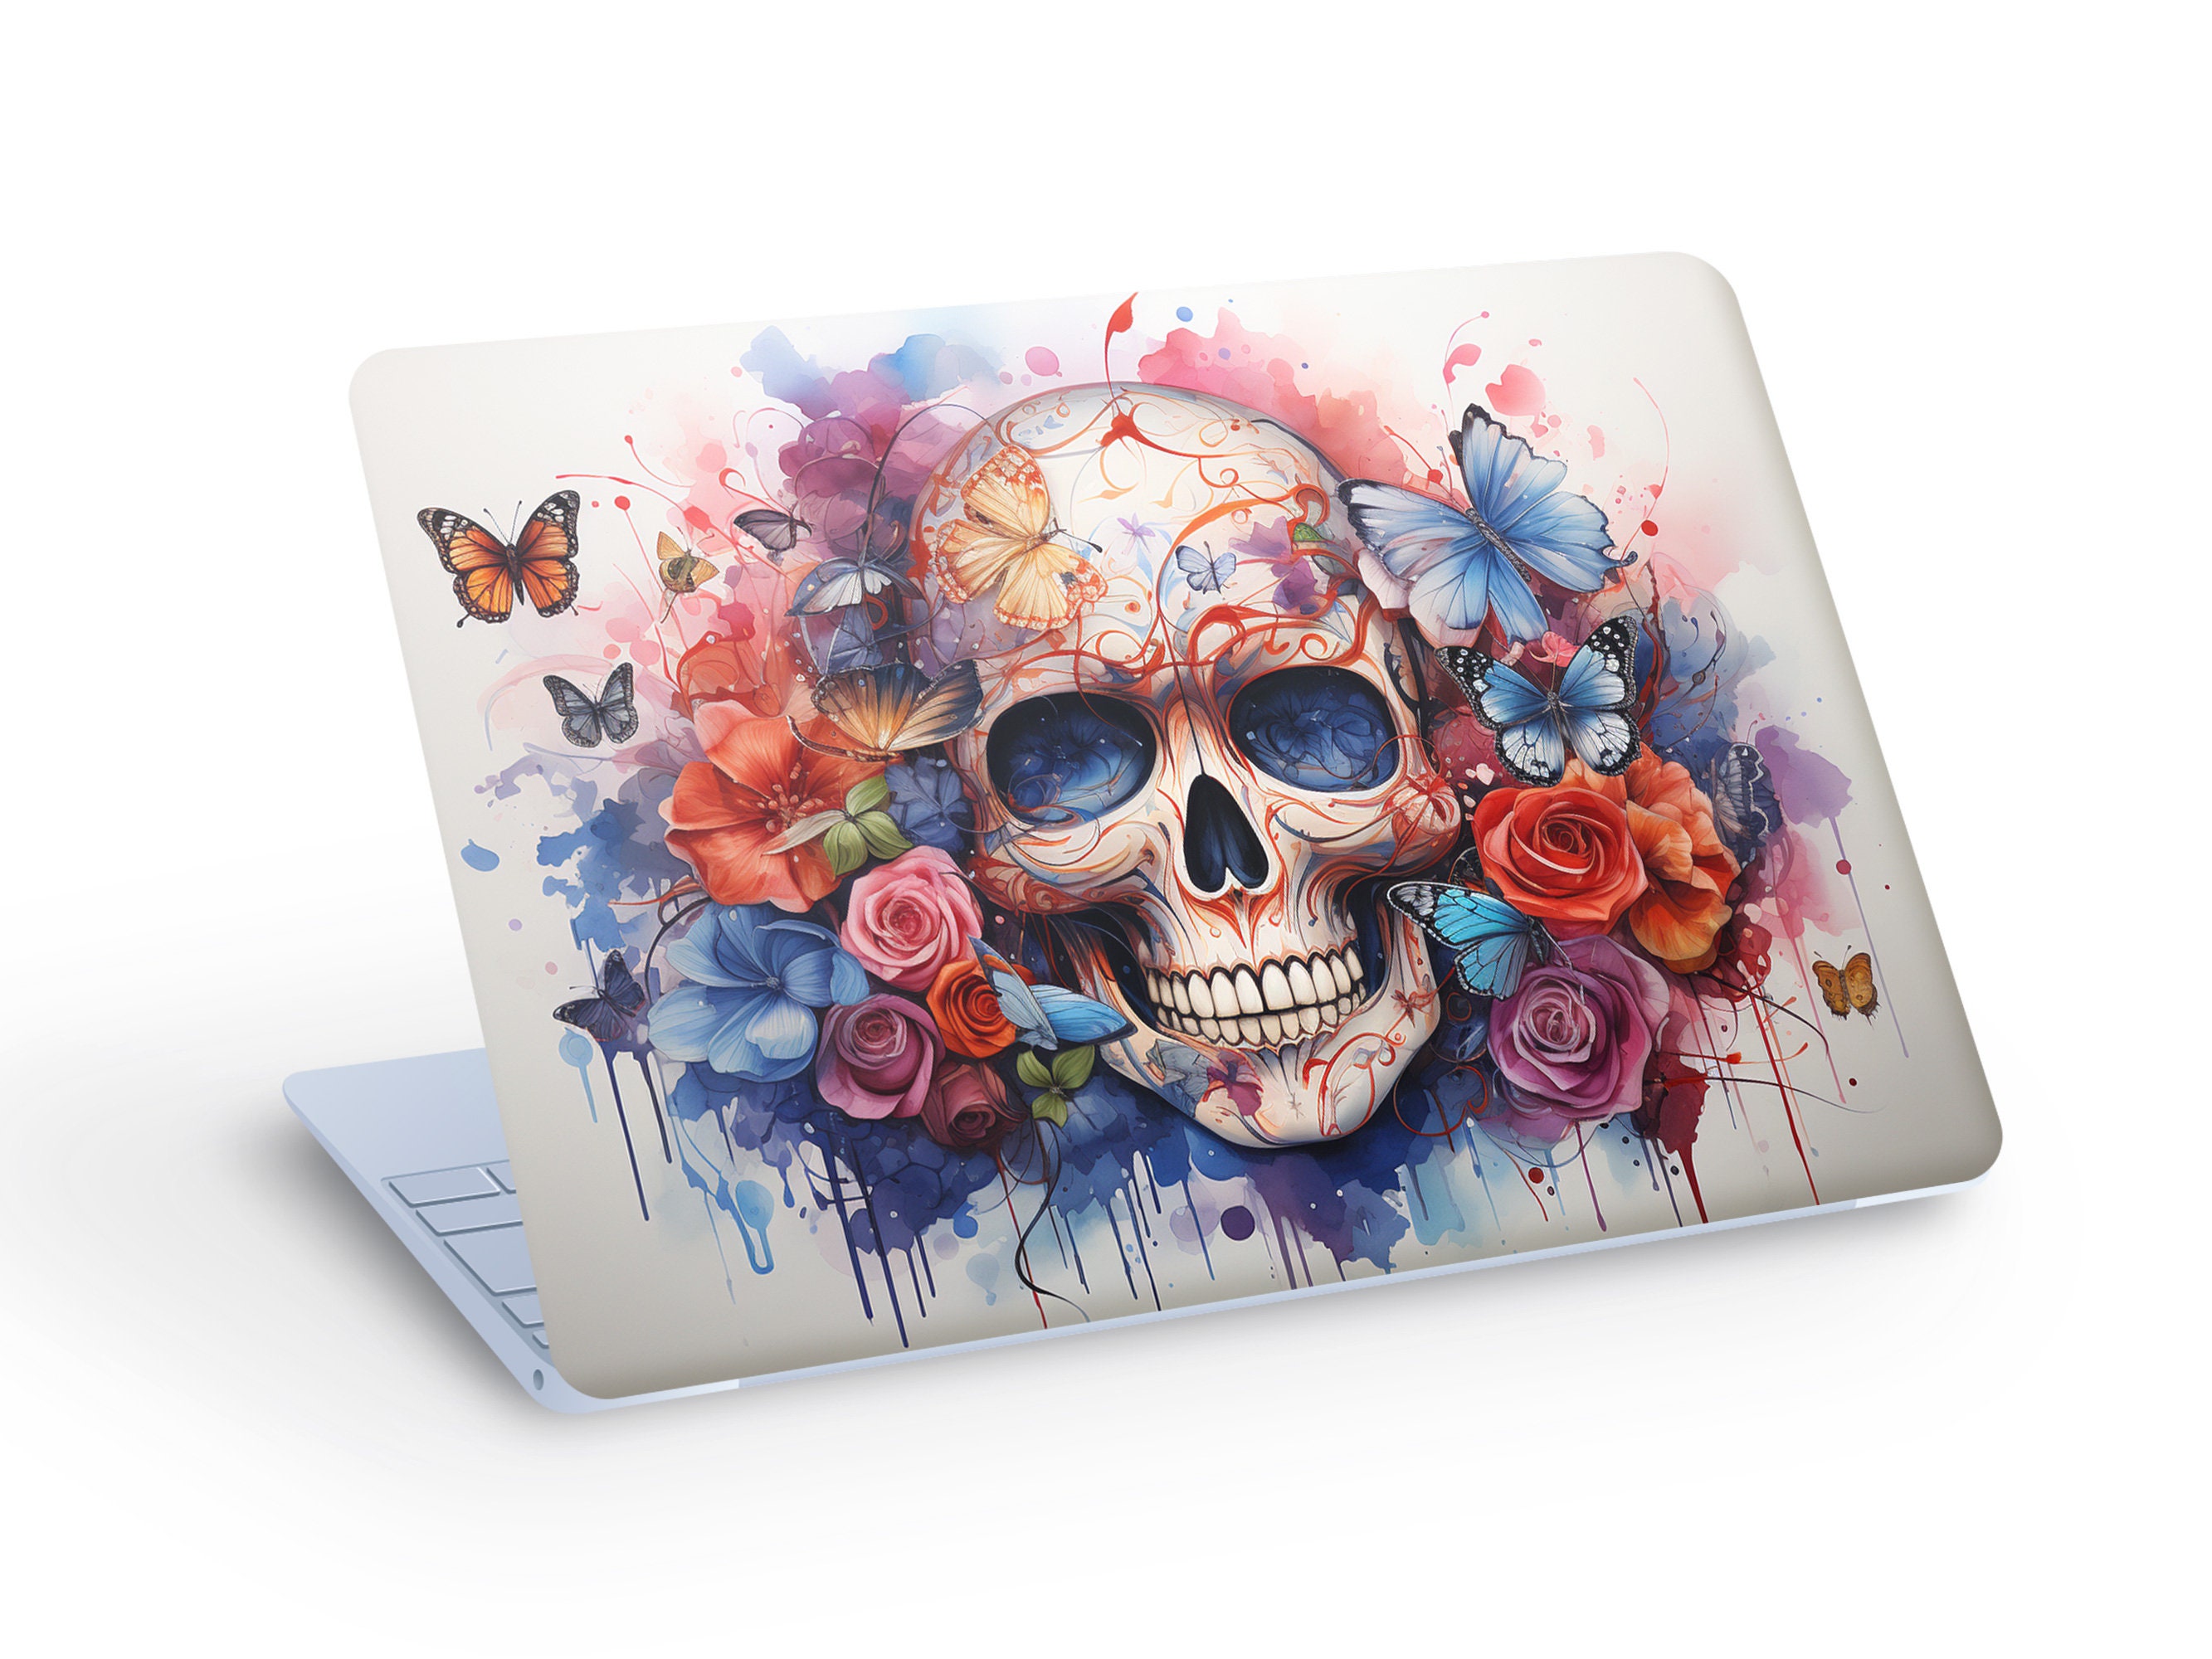 Buy Custom Laptop Skin With Design You Love